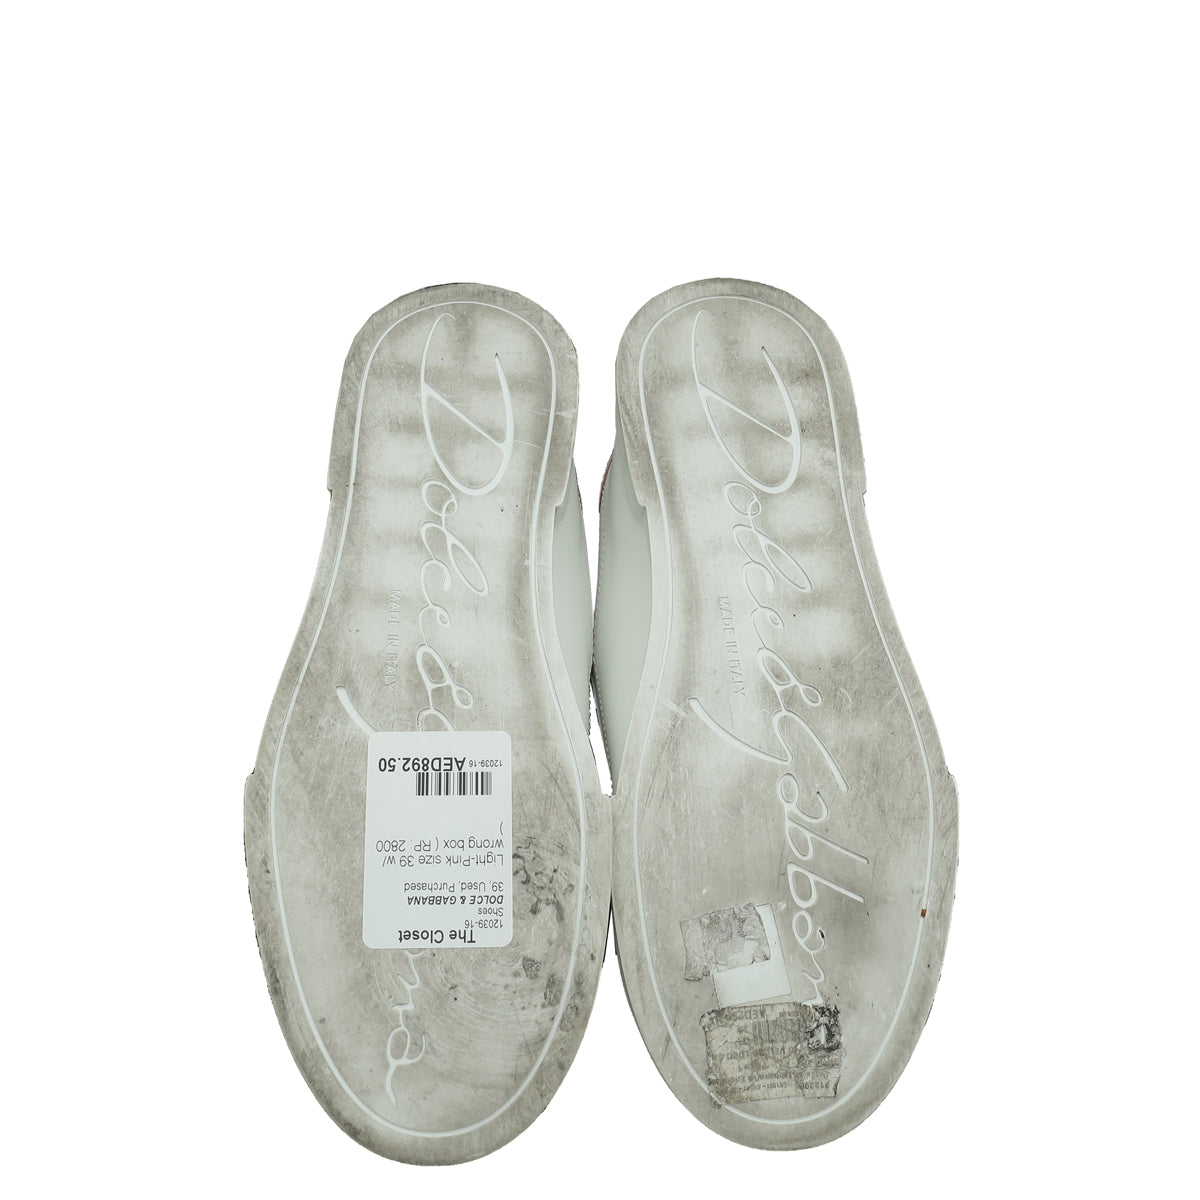 Dolce & Gabbana Bicolor Portofino Velcro Logo Sneakers 39